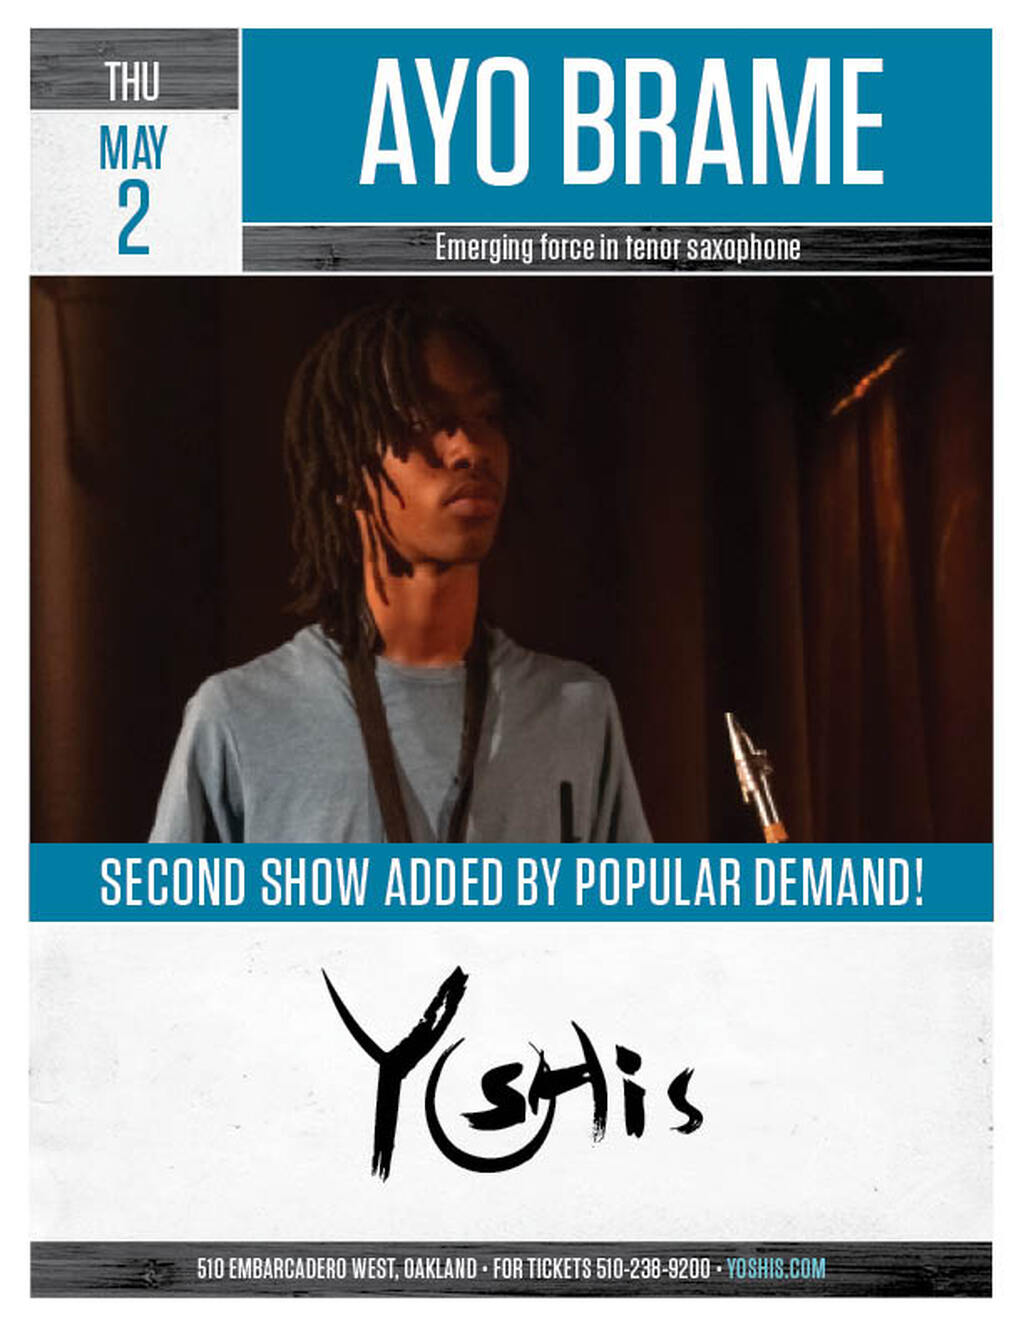 Yoshi s MAY AYU BRAME  An Emerging Force in Tenor Saxophone promotion flier on Digifli com